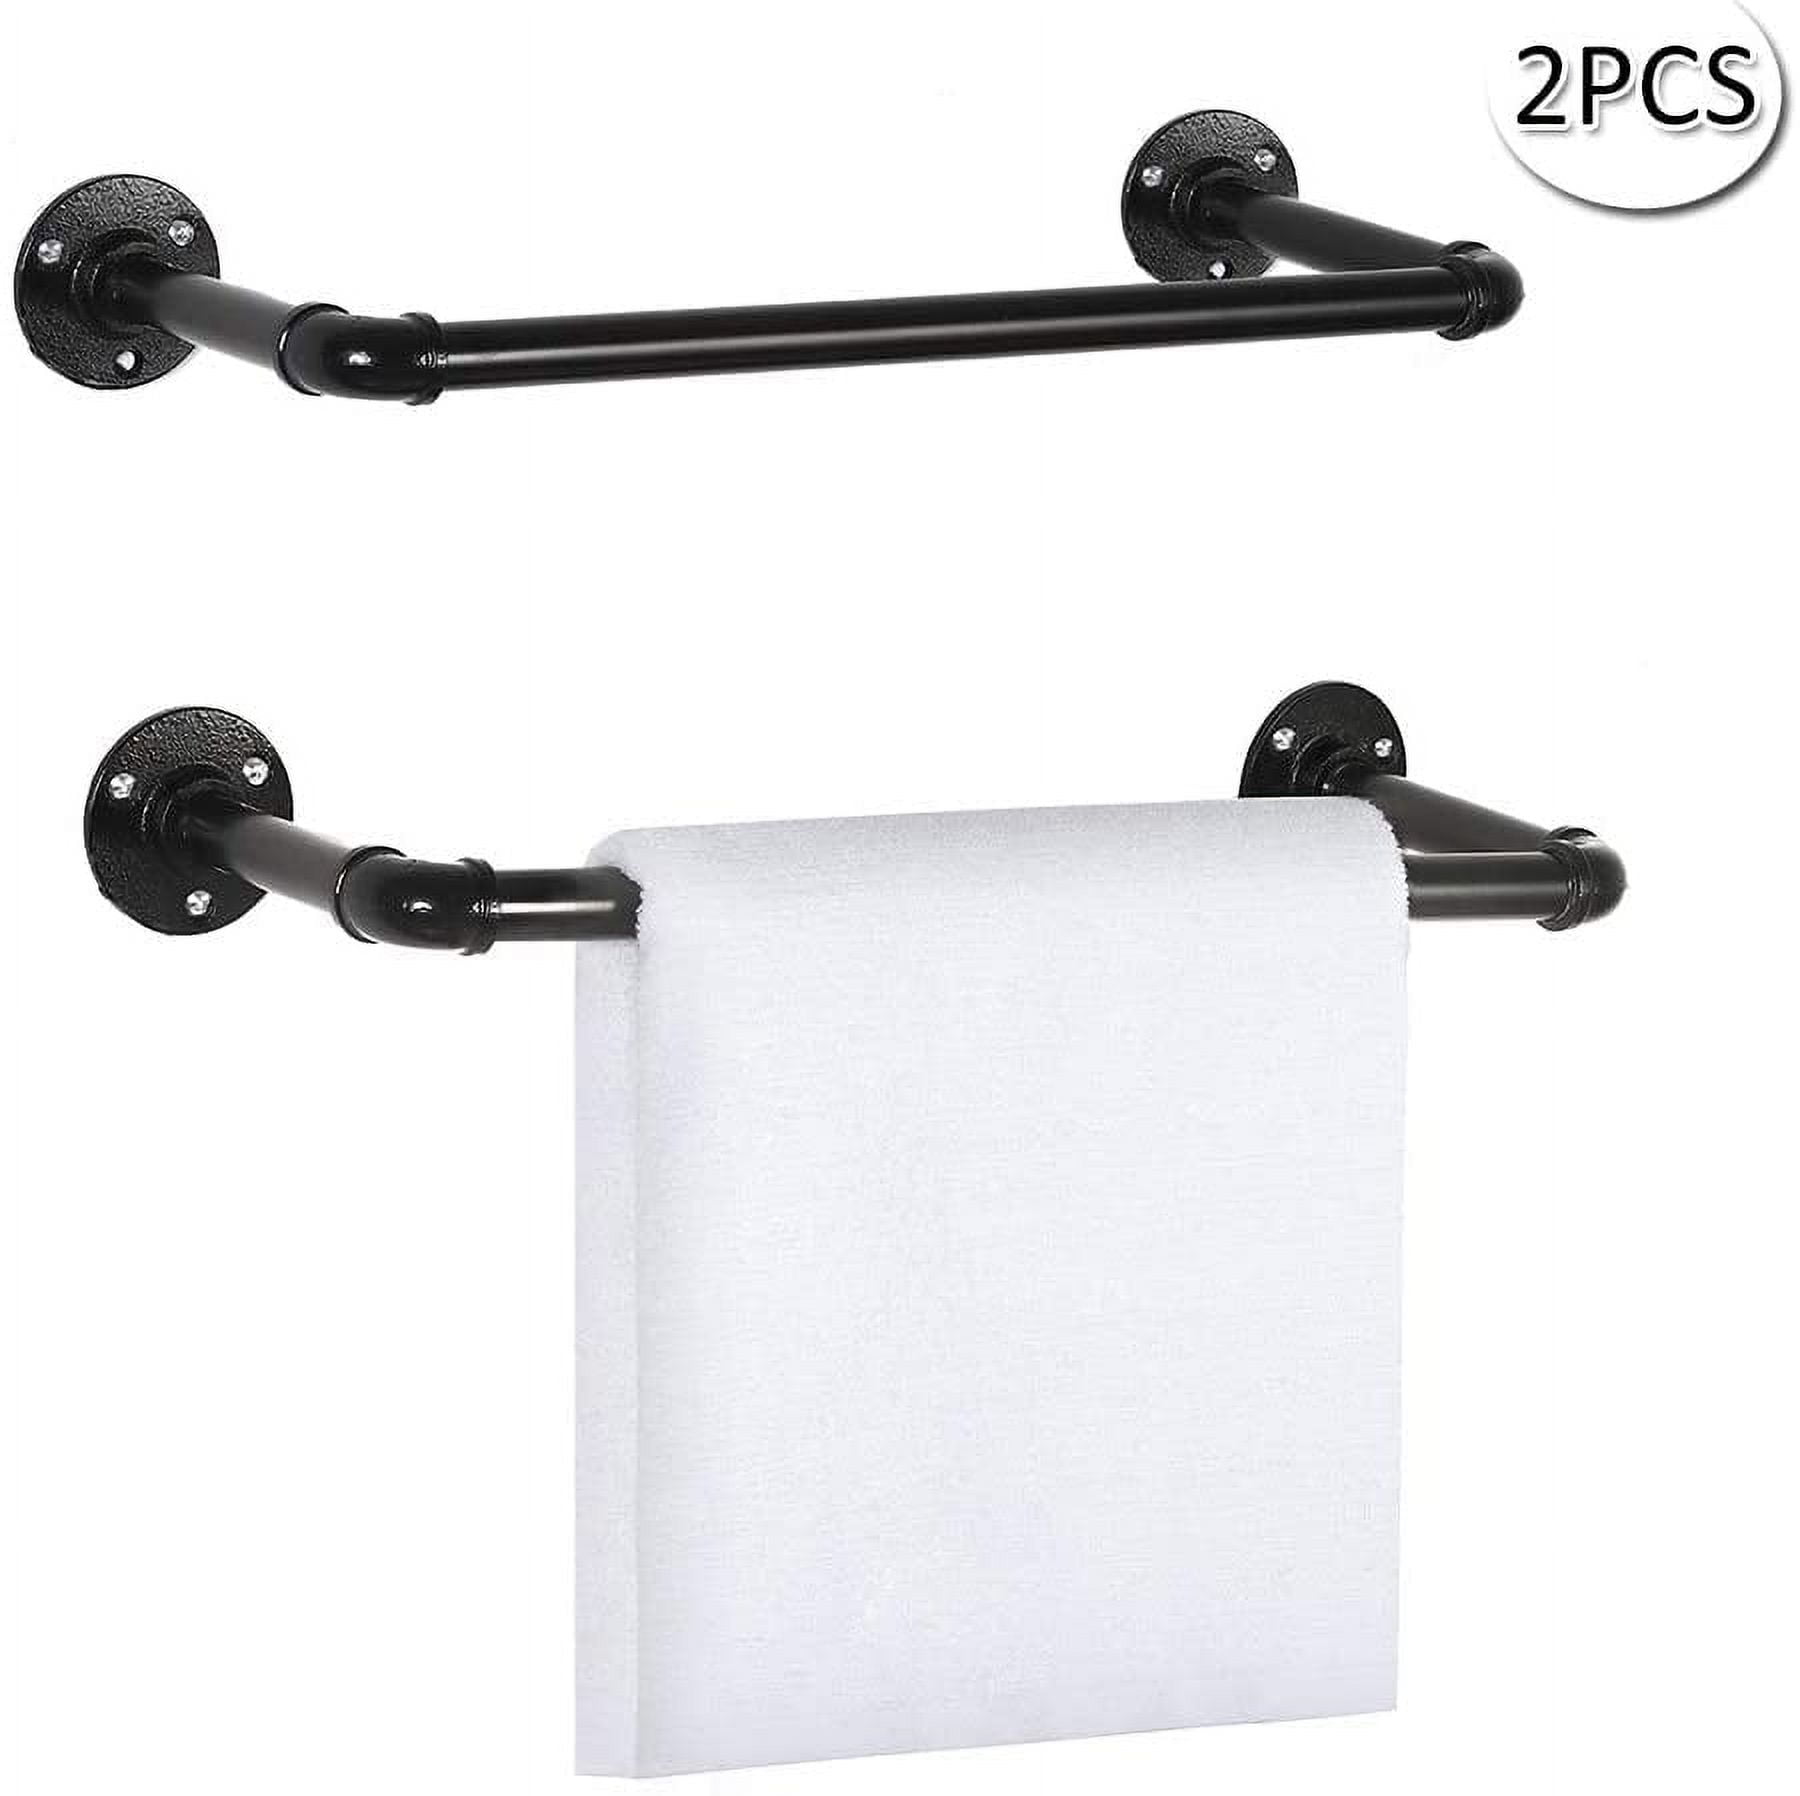 Pipe Decor 1/2 in. Black Steel Pipe 1.2 ft. H Paper Towel Holder Kit